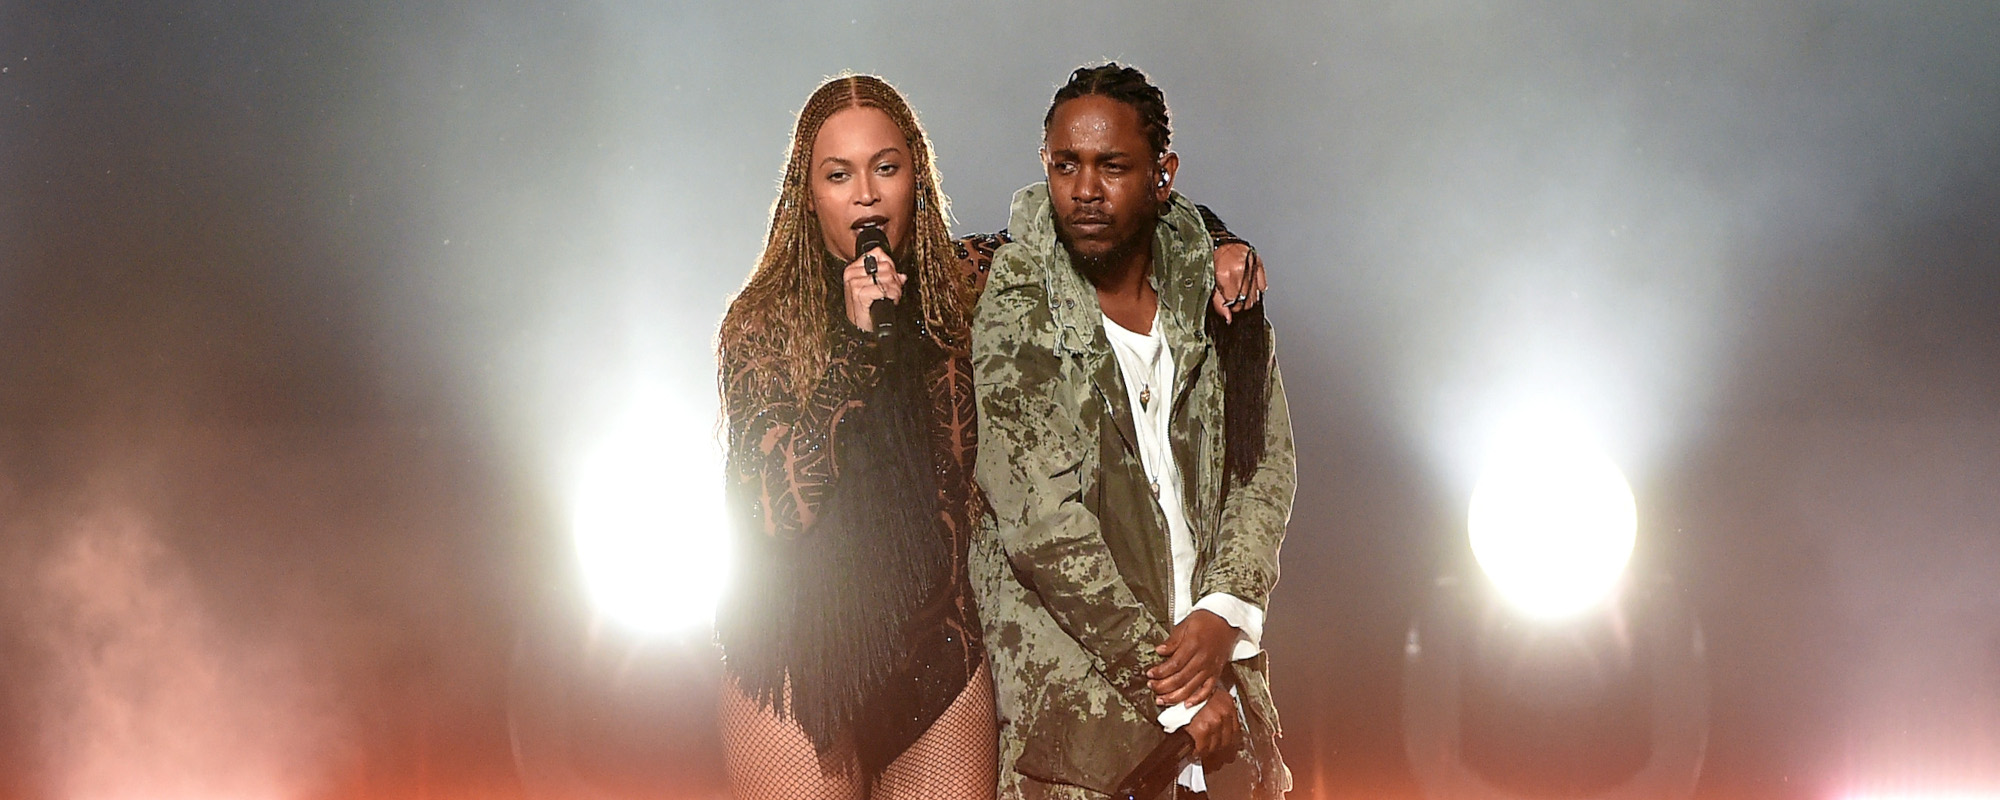 Kendrick Lamar Joins Beyoncé on Stage for “America Has A Problem” Remix